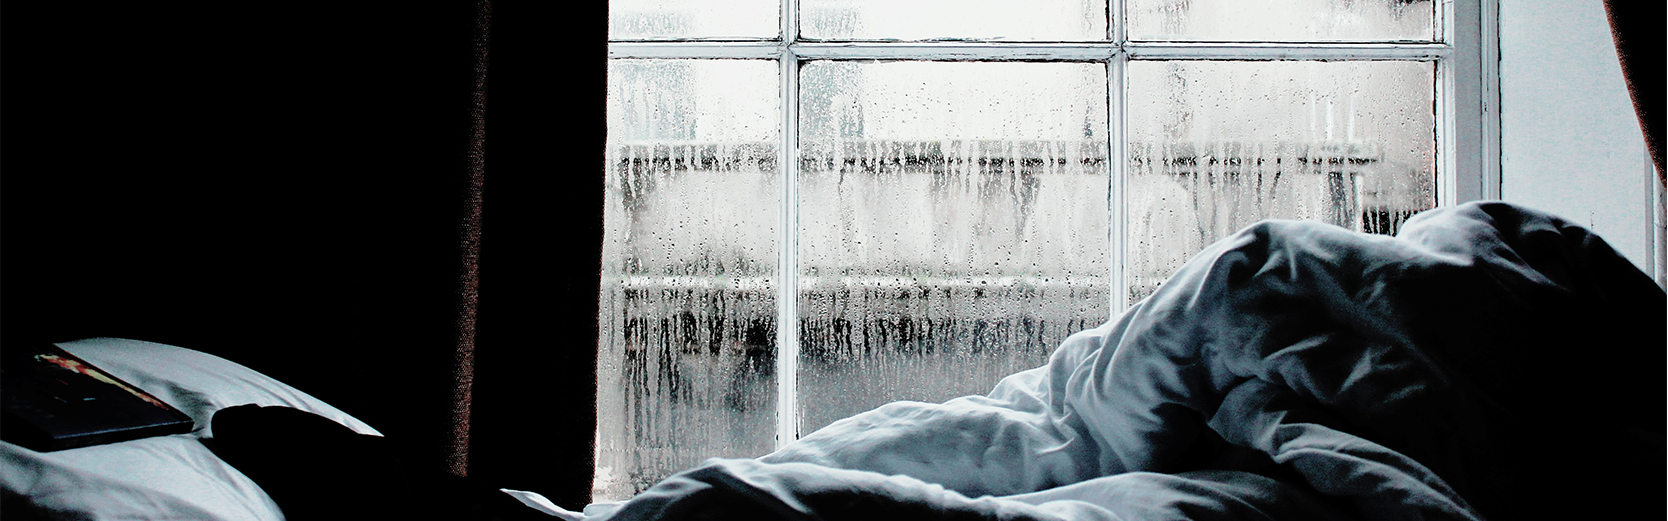 condensation in window